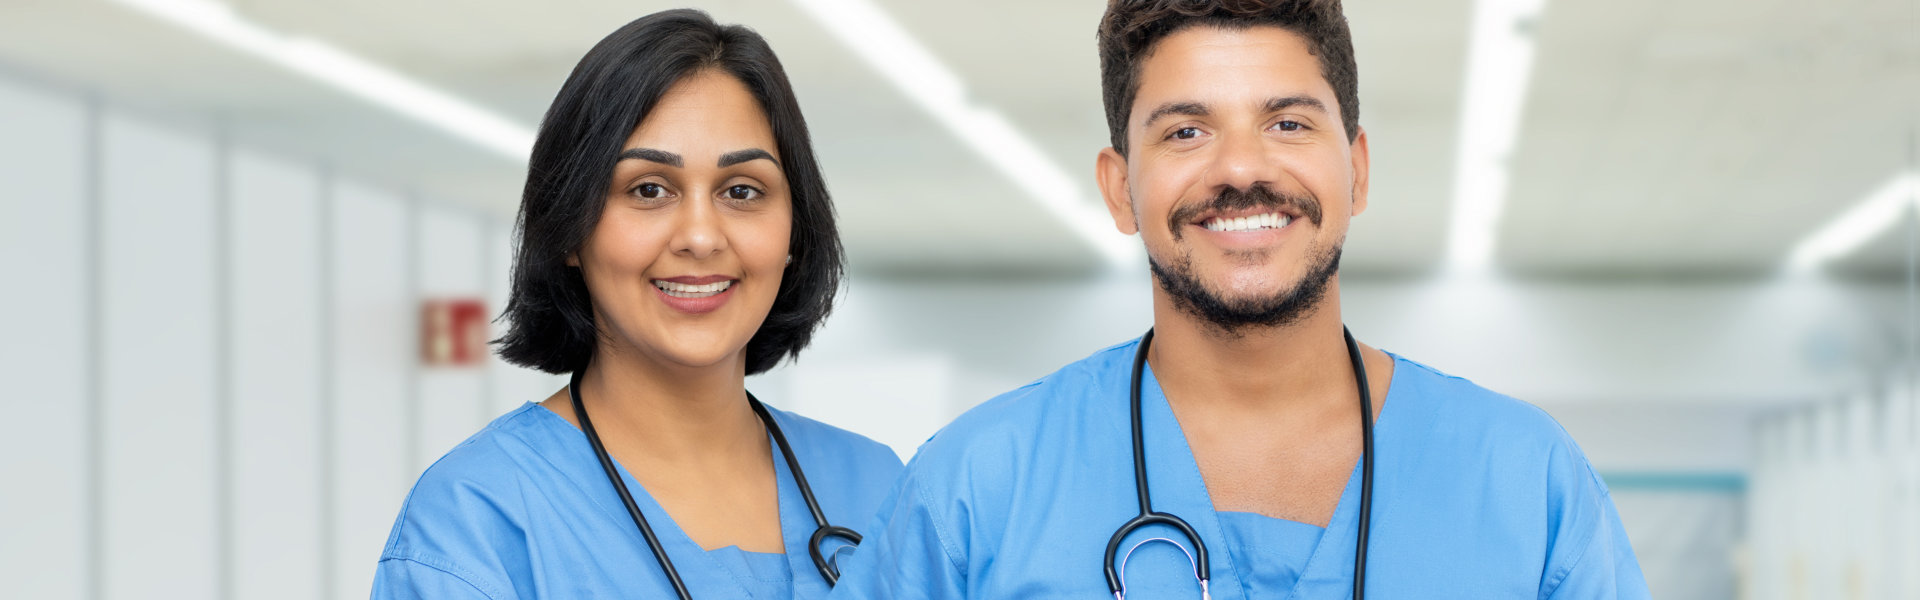 male and female nurse smiling